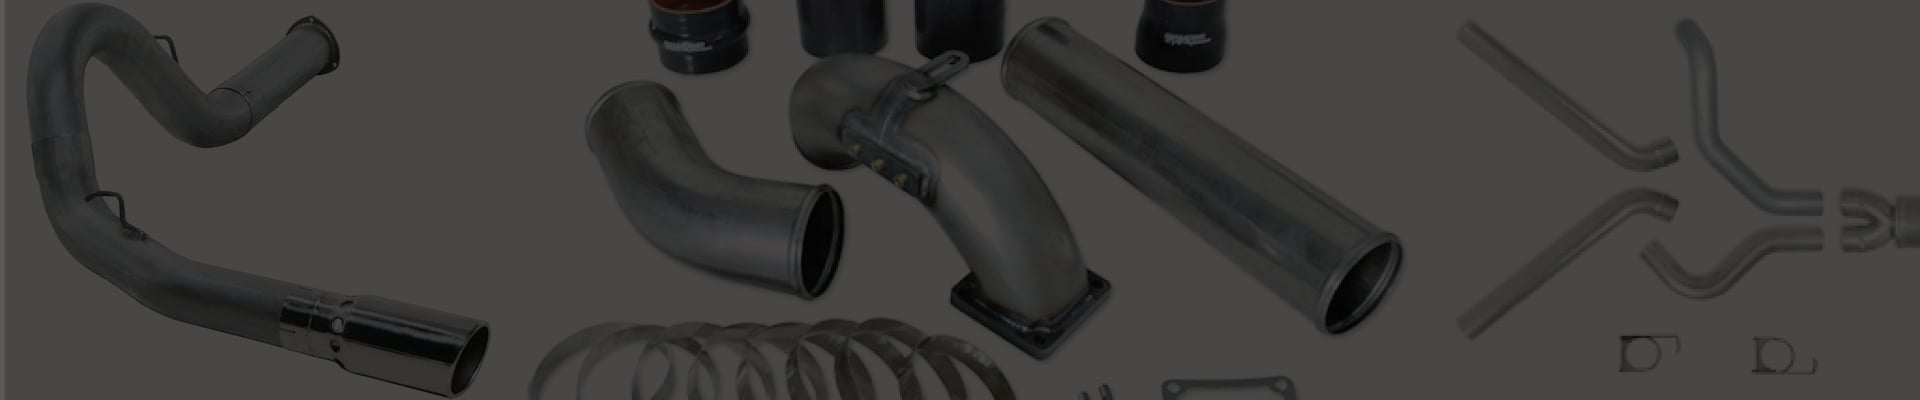 Diamond Eye Exhaust Systems | Kits | Turbo Back | Cat Back Diesel Exhaust